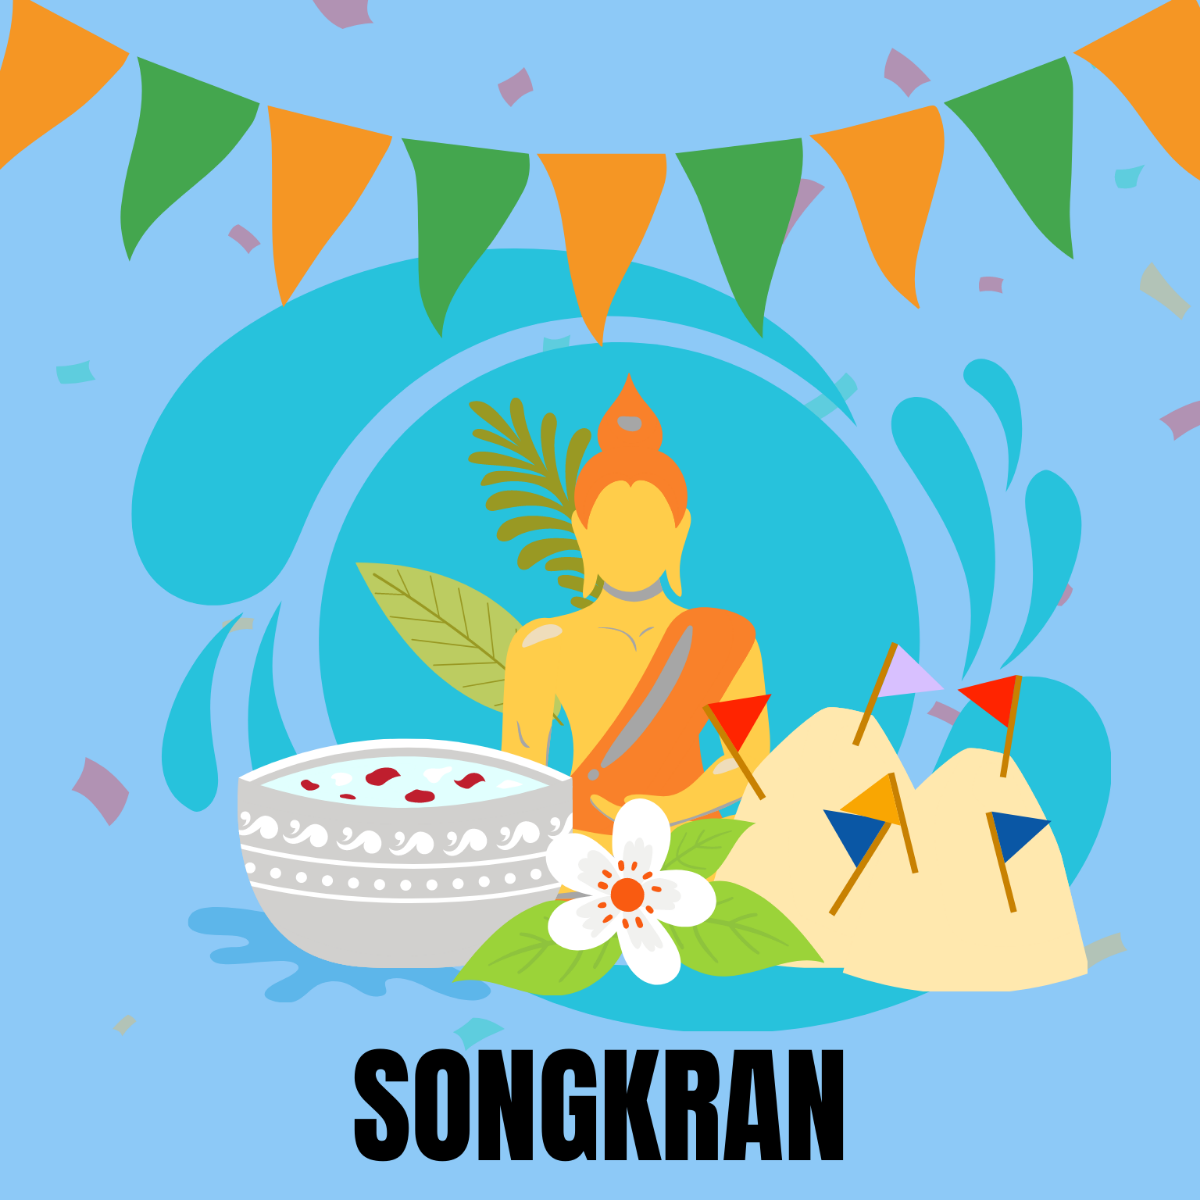 Songkran Image Template